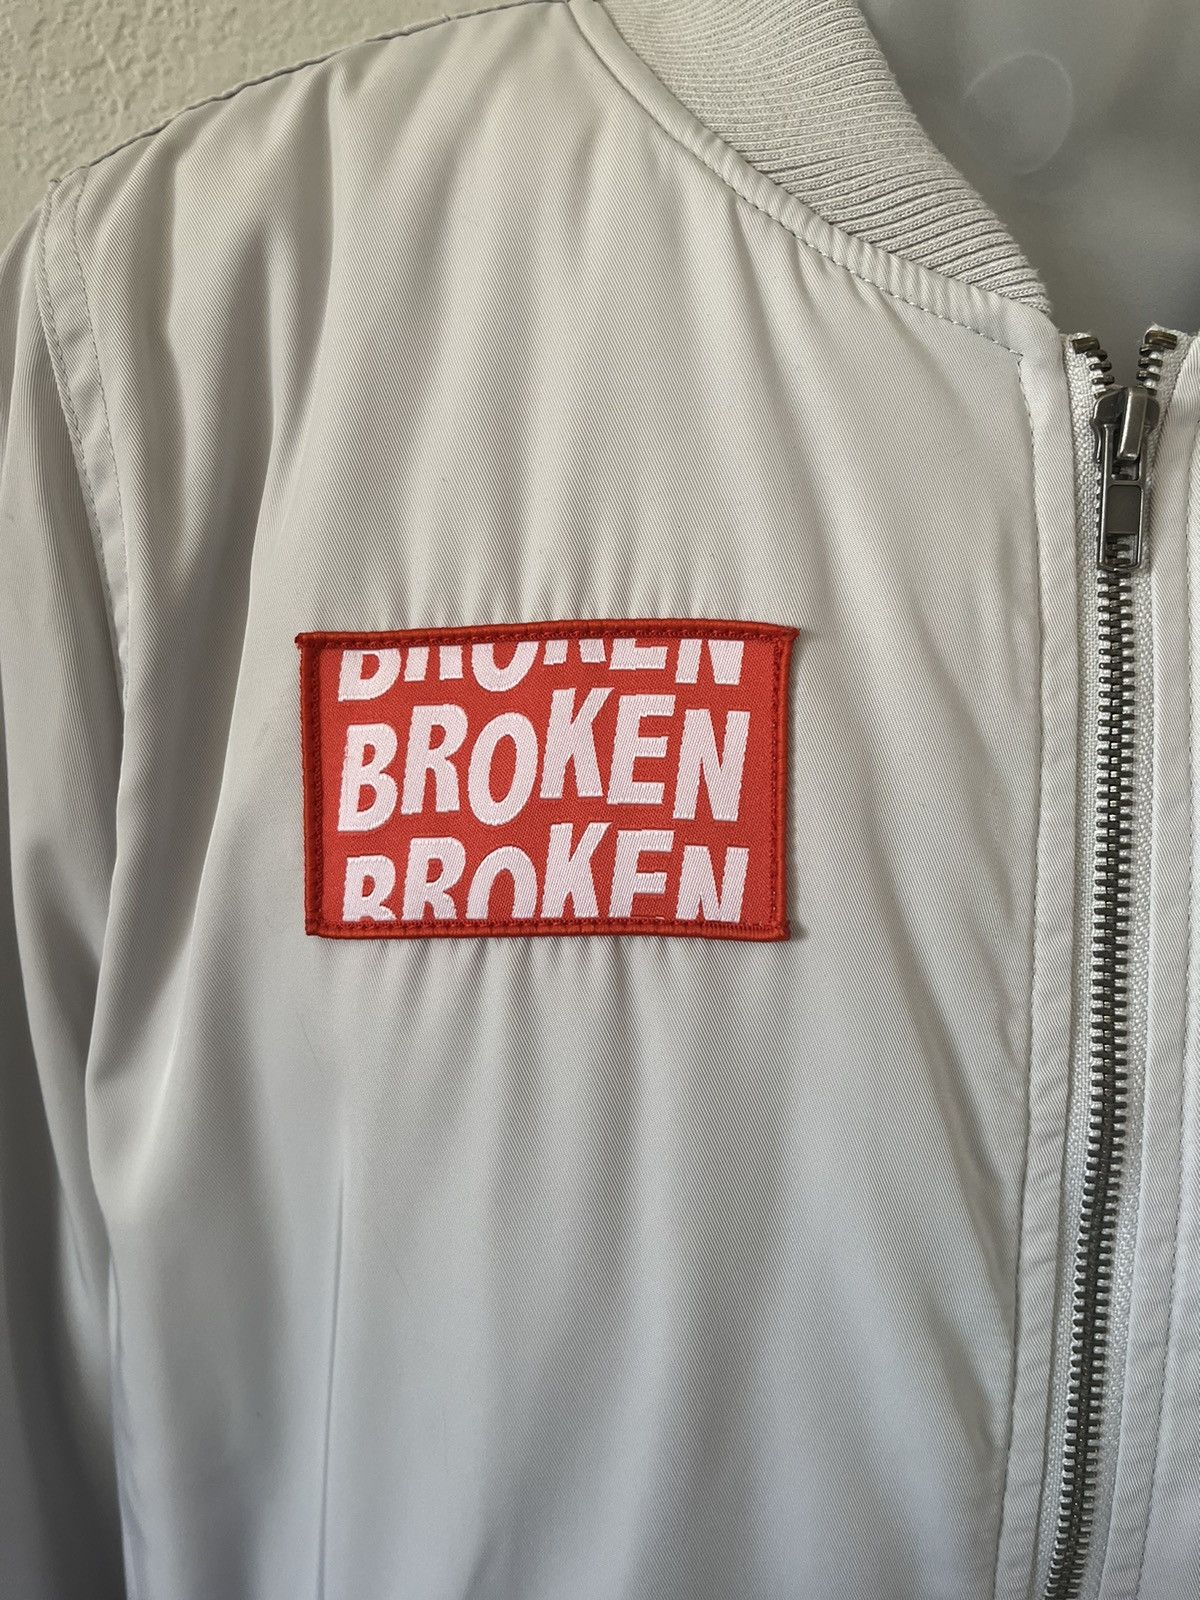 Broken Promises Broken Promises Women's Grey Bomber Jacket Size L / US 10 / IT 46 - 9 Thumbnail